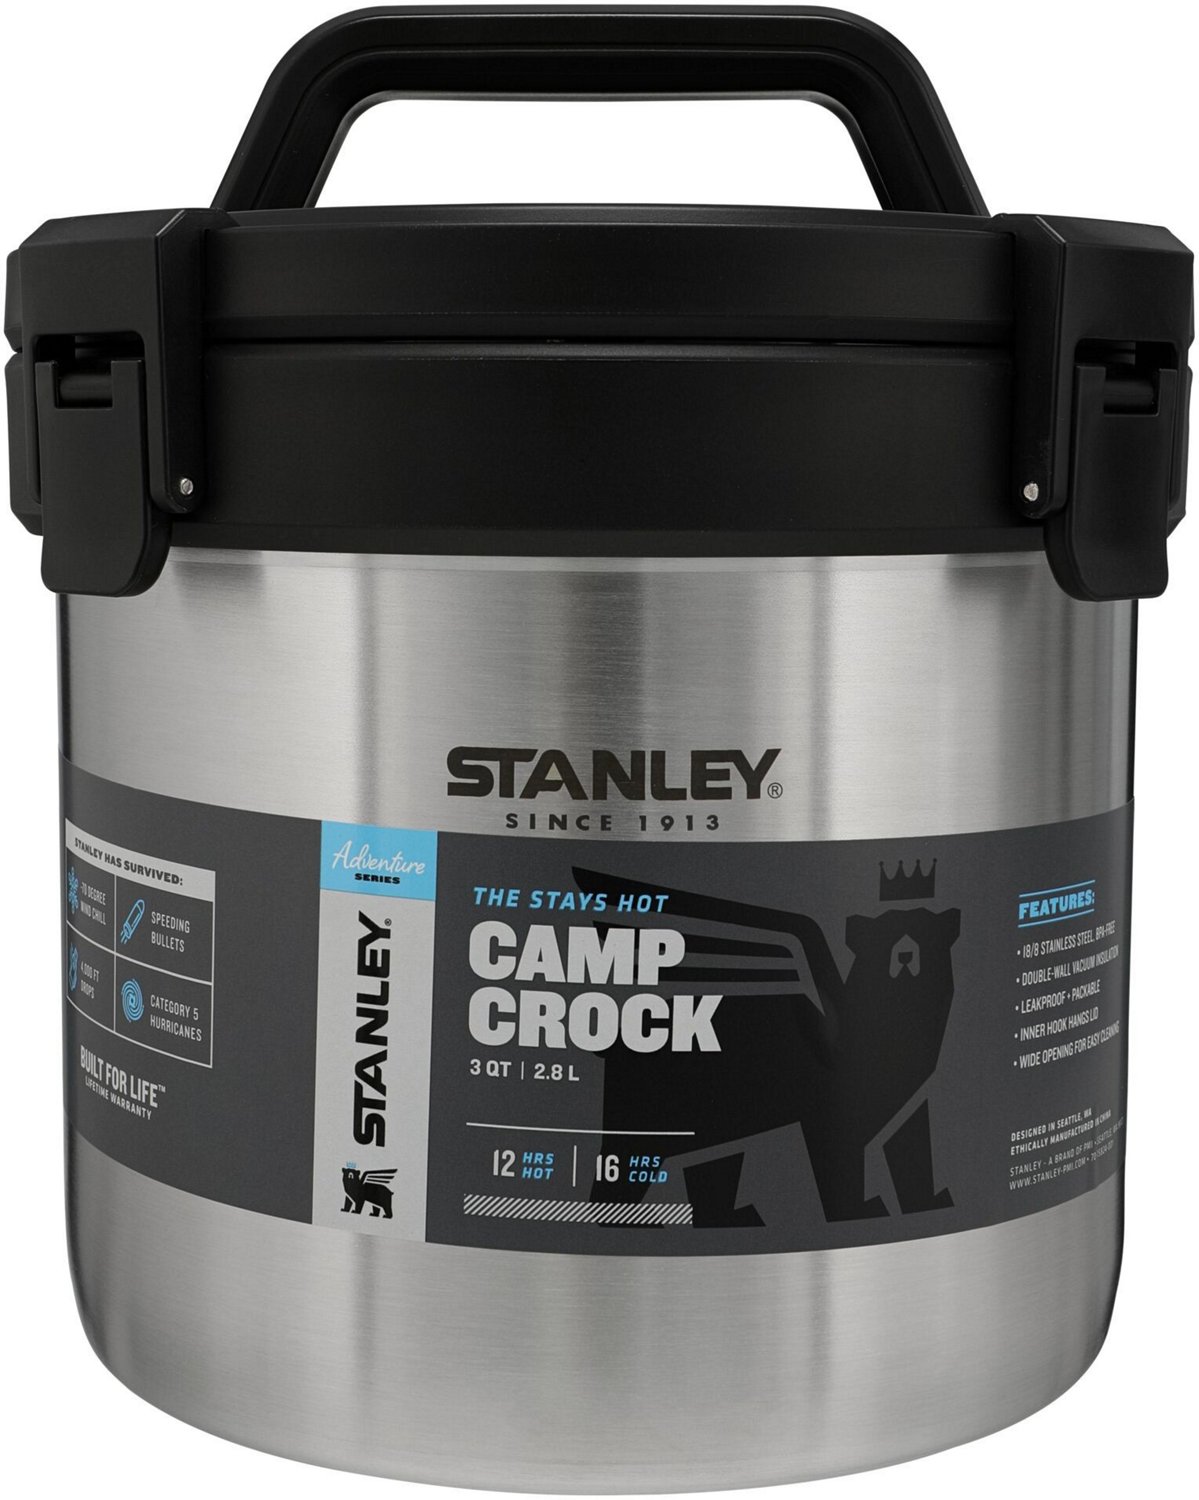 Stanley Adventure Stay Hot Camp 3 qt Crock Pot - sporting goods